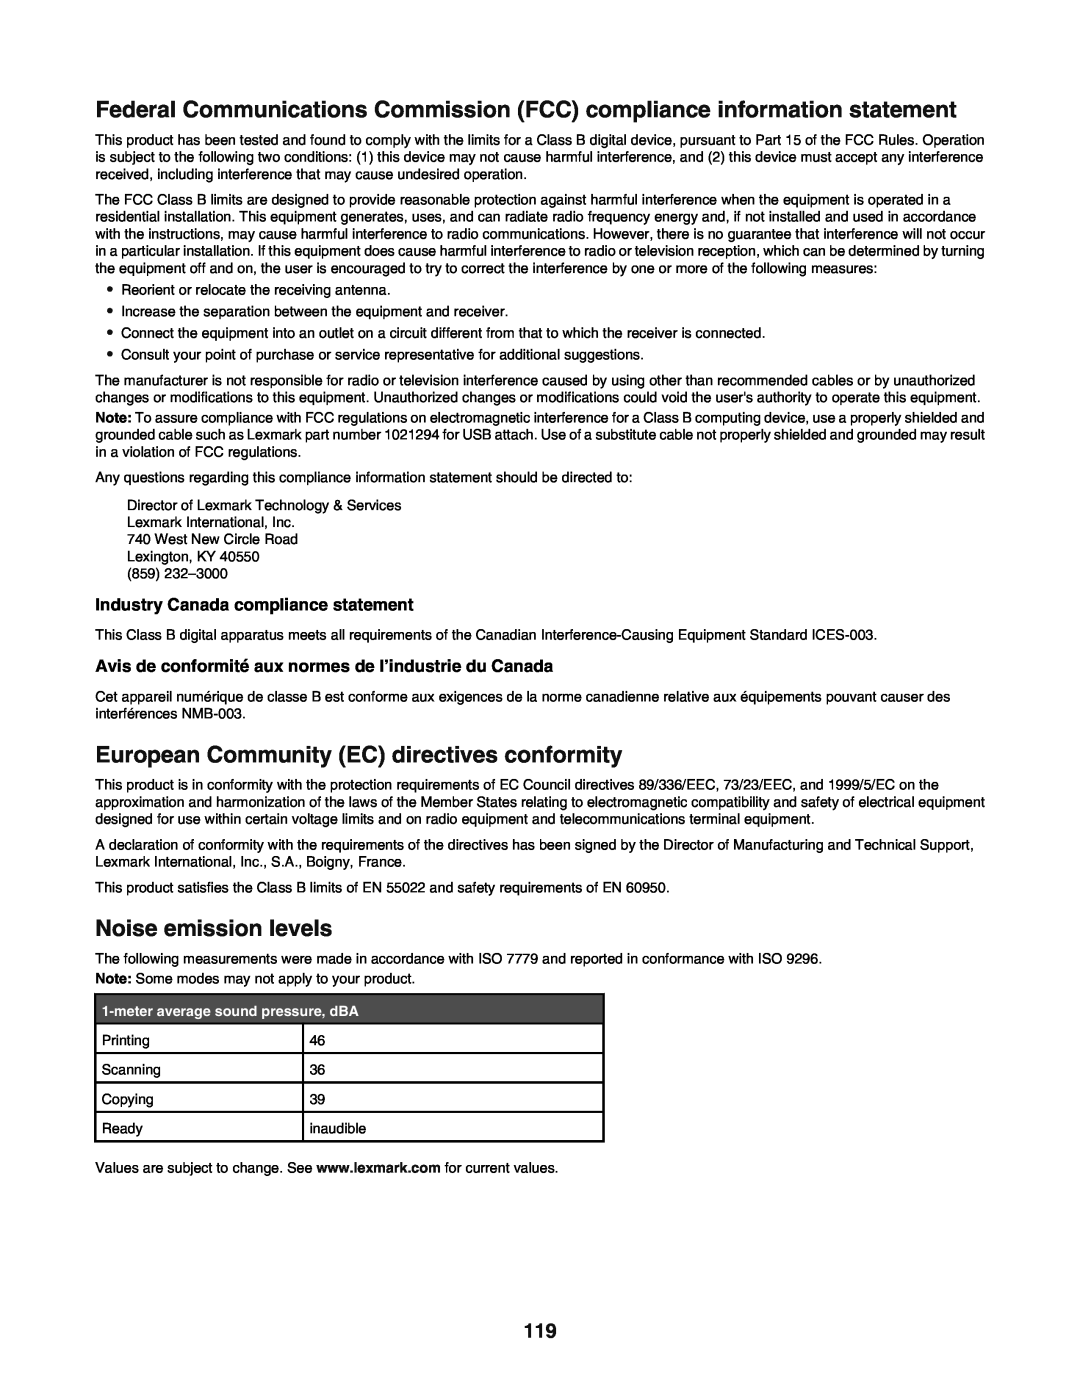 Lexmark 5400 European Community EC directives conformity, Noise emission levels, Industry Canada compliance statement 